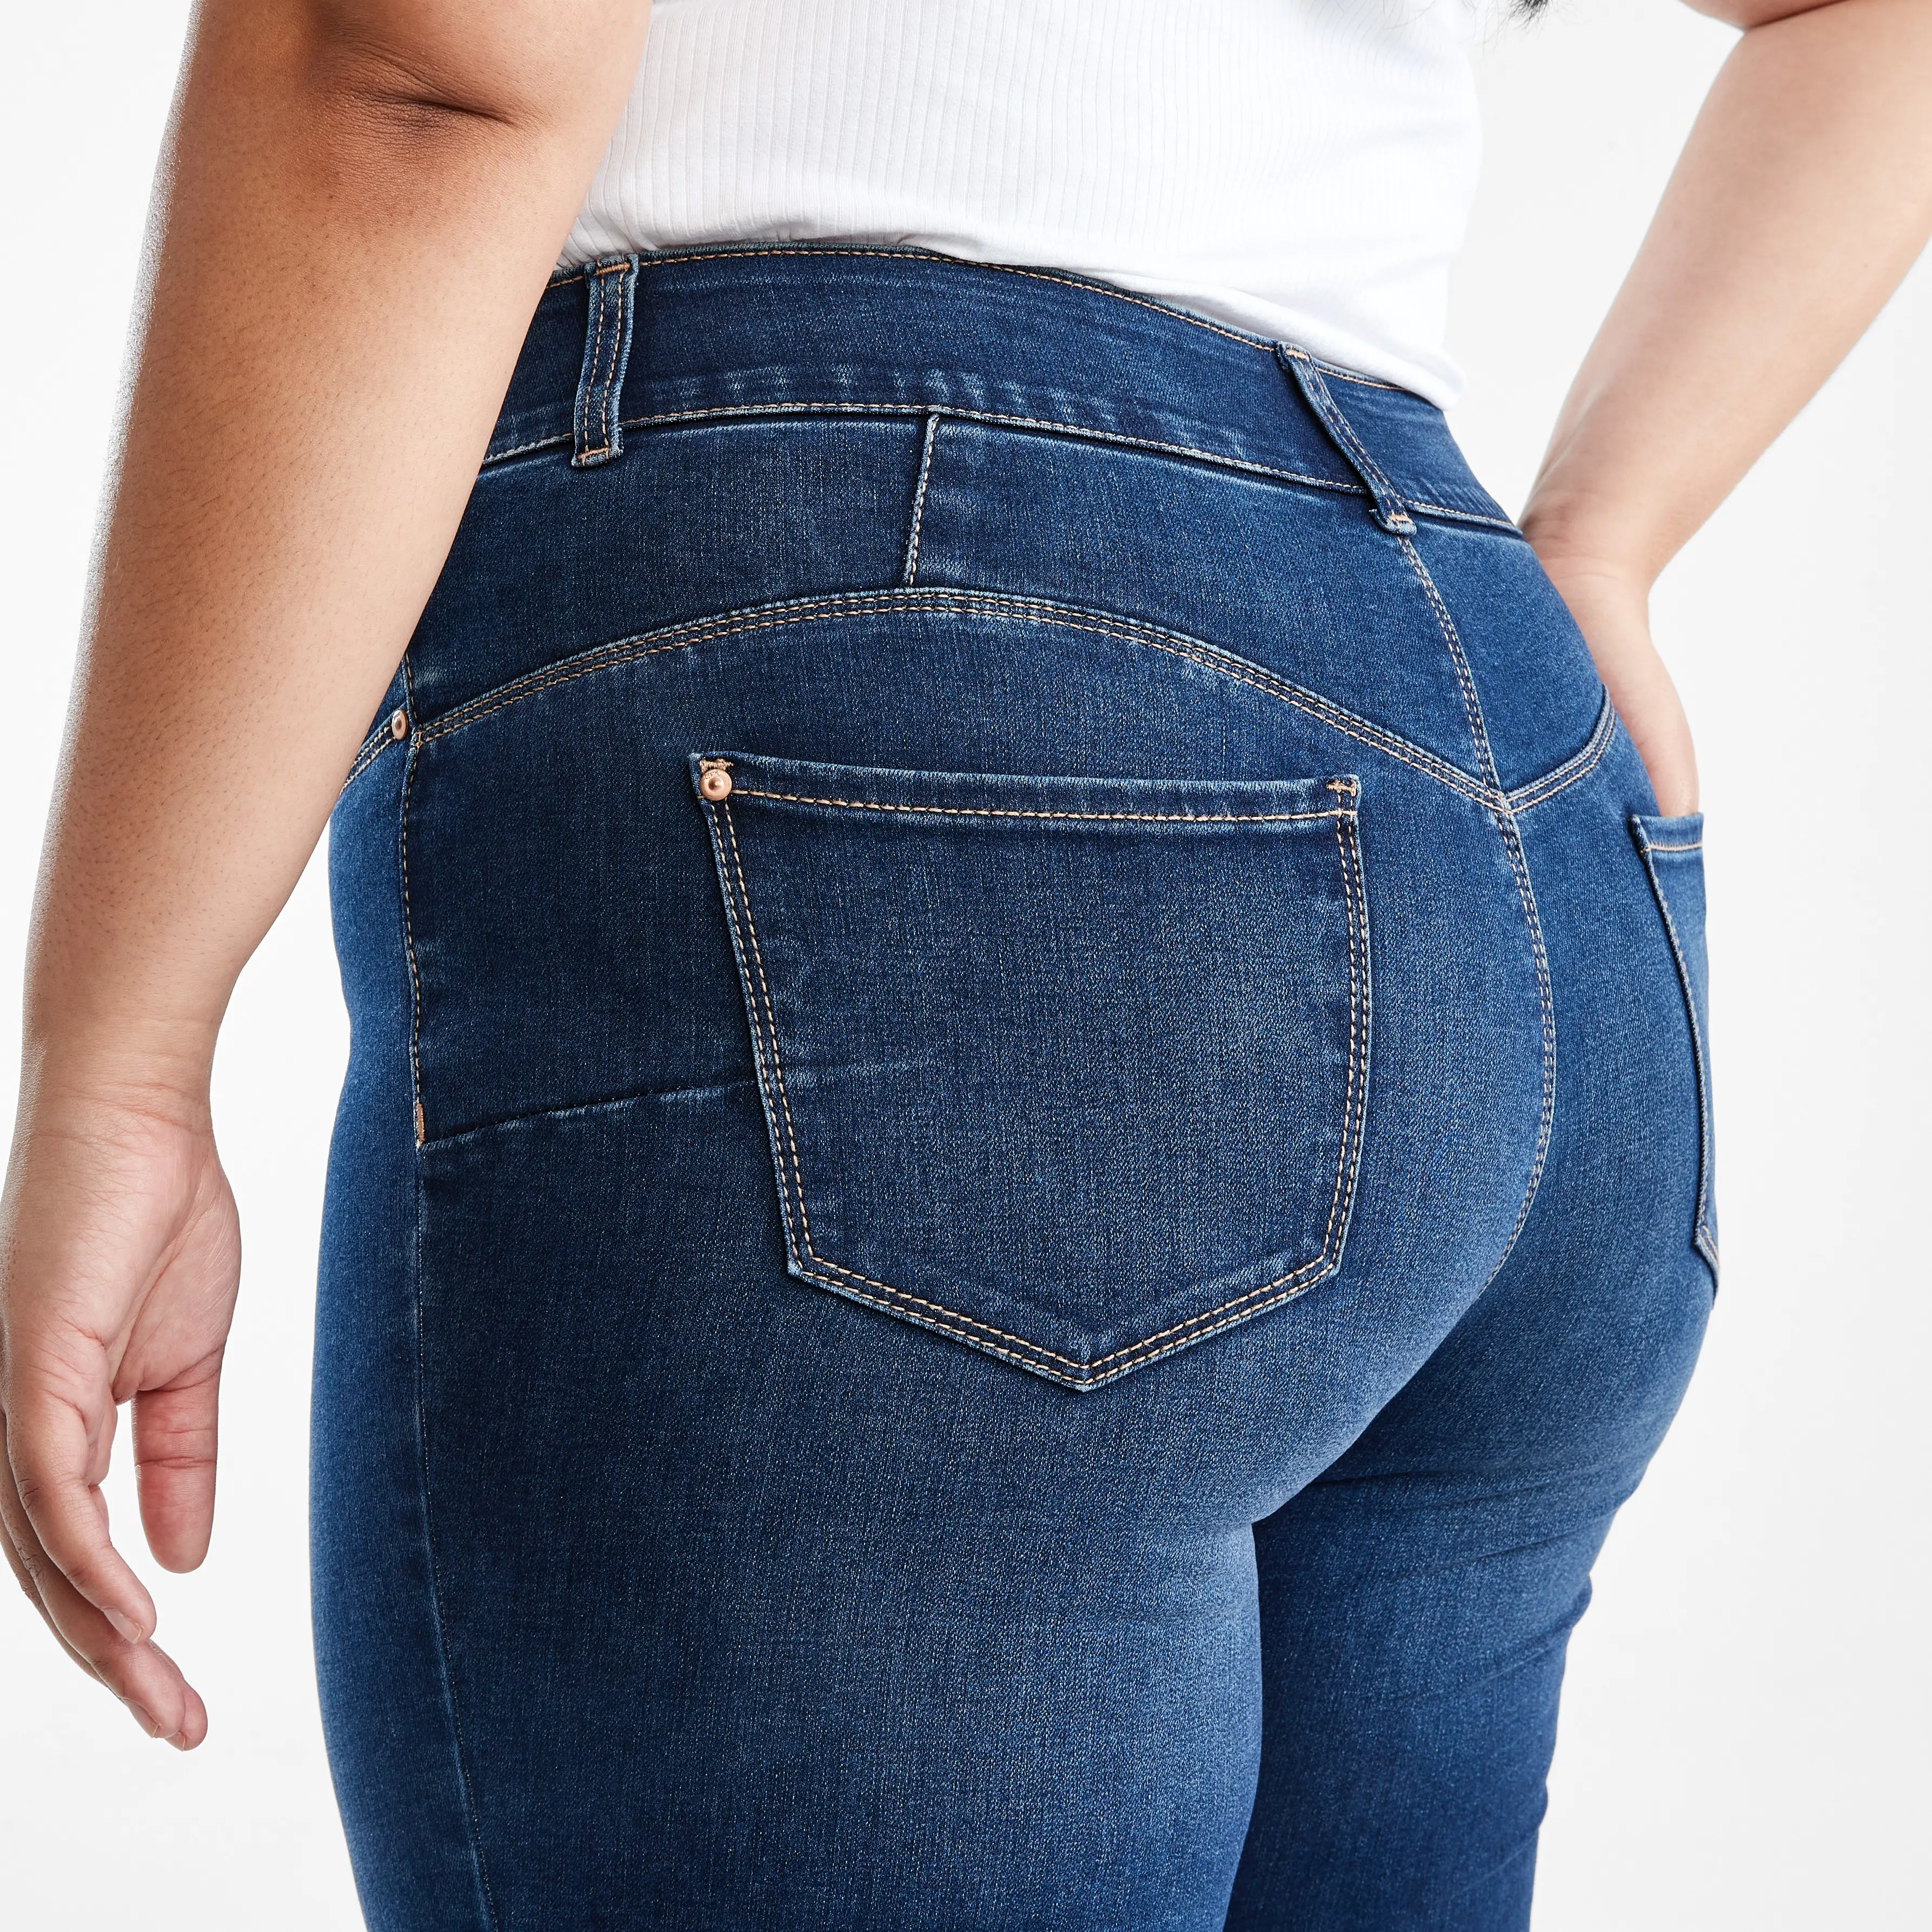 You NEED these Jeans from Kmart #kmart #kmarthaul #kmartaus #kmartsecr